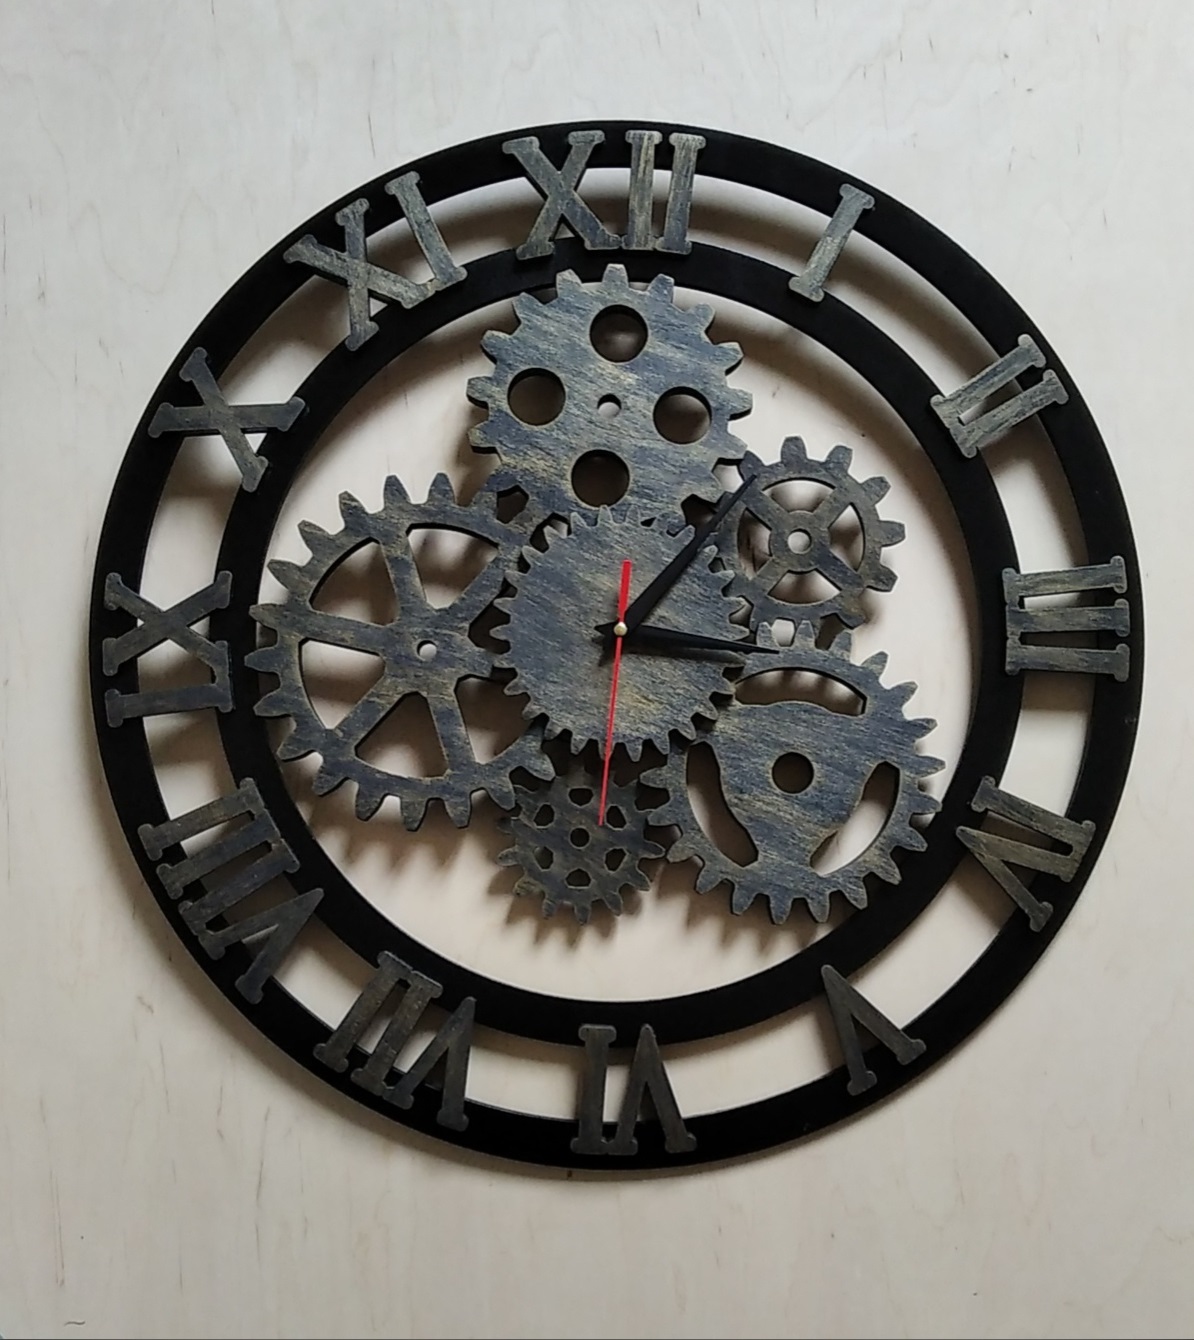 Laser Cut Roman Numerals Gear Clock Free Vector